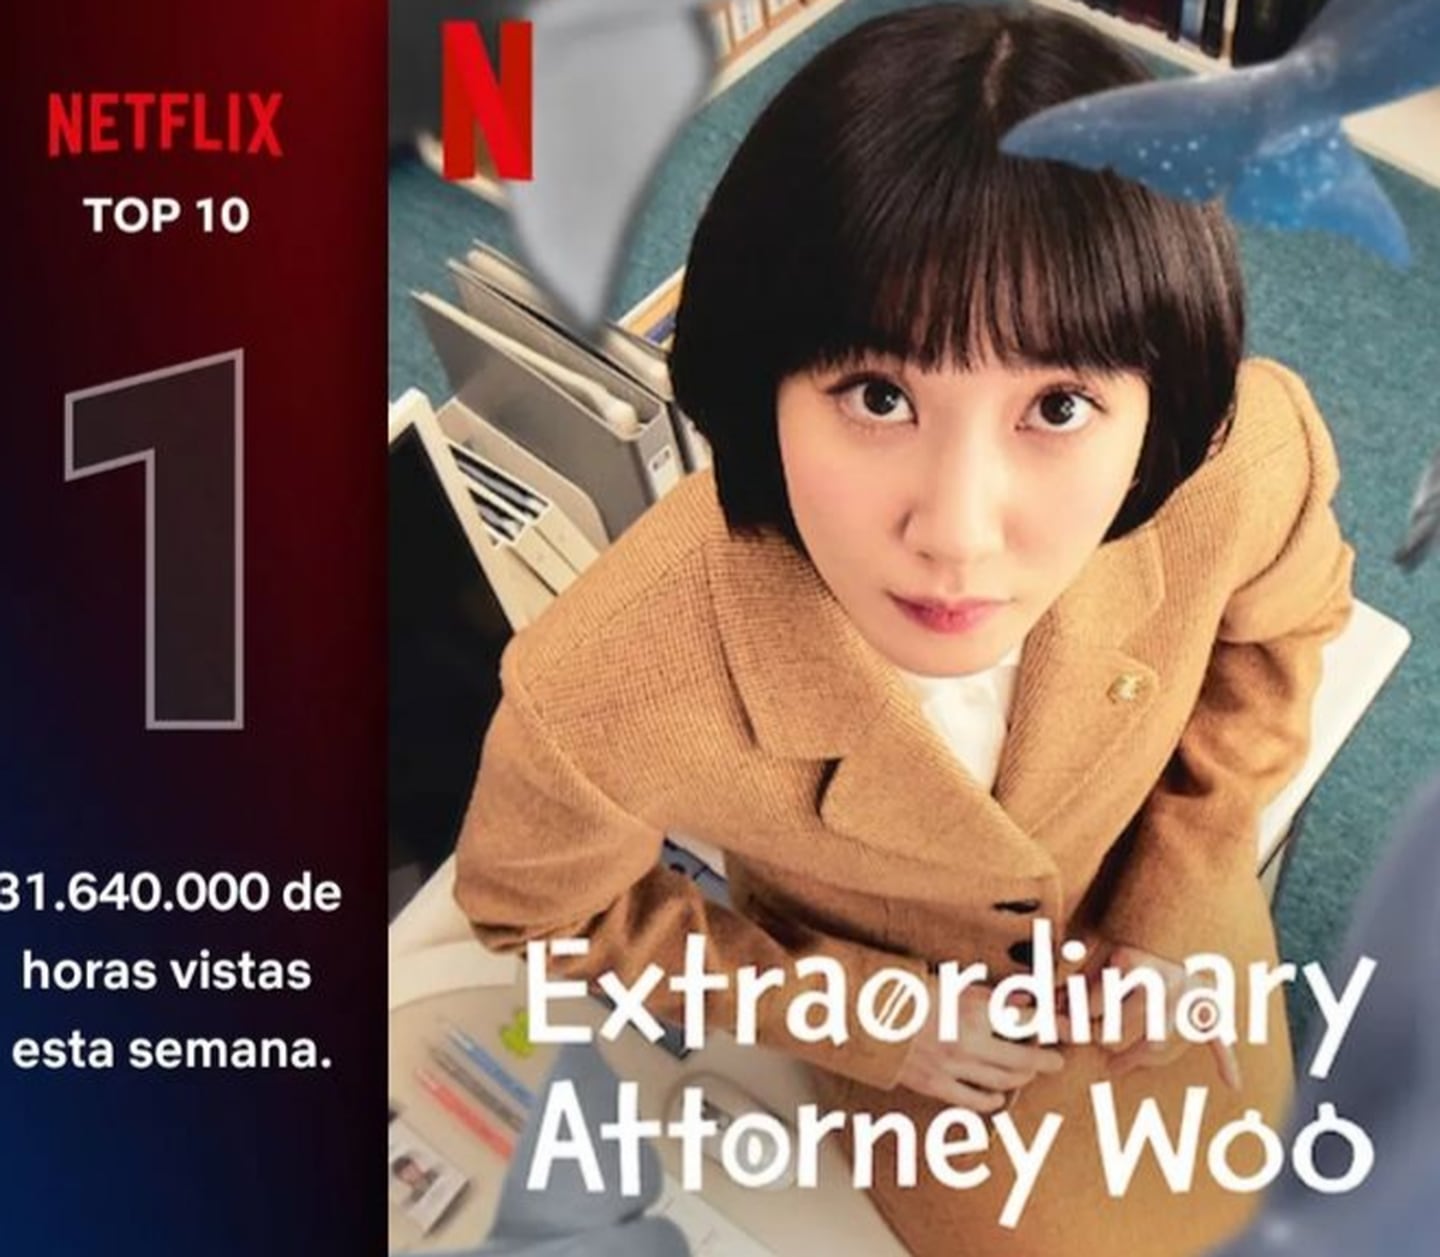 Woo, una abogada extraordinaria es una entretenida historia de Netflix que retrata el autismo